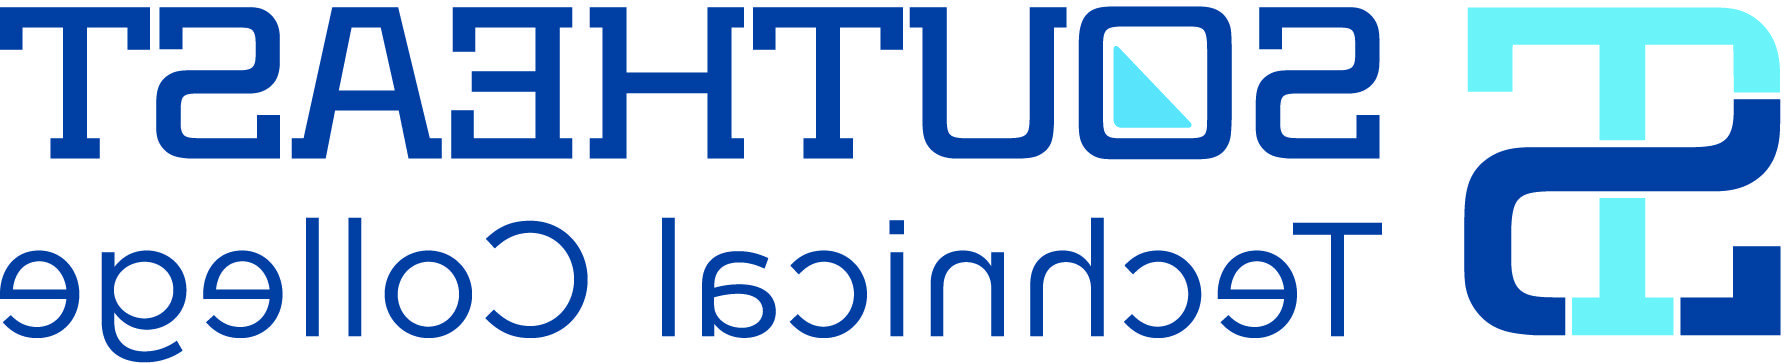 Southeast 技术 College logo and monogram